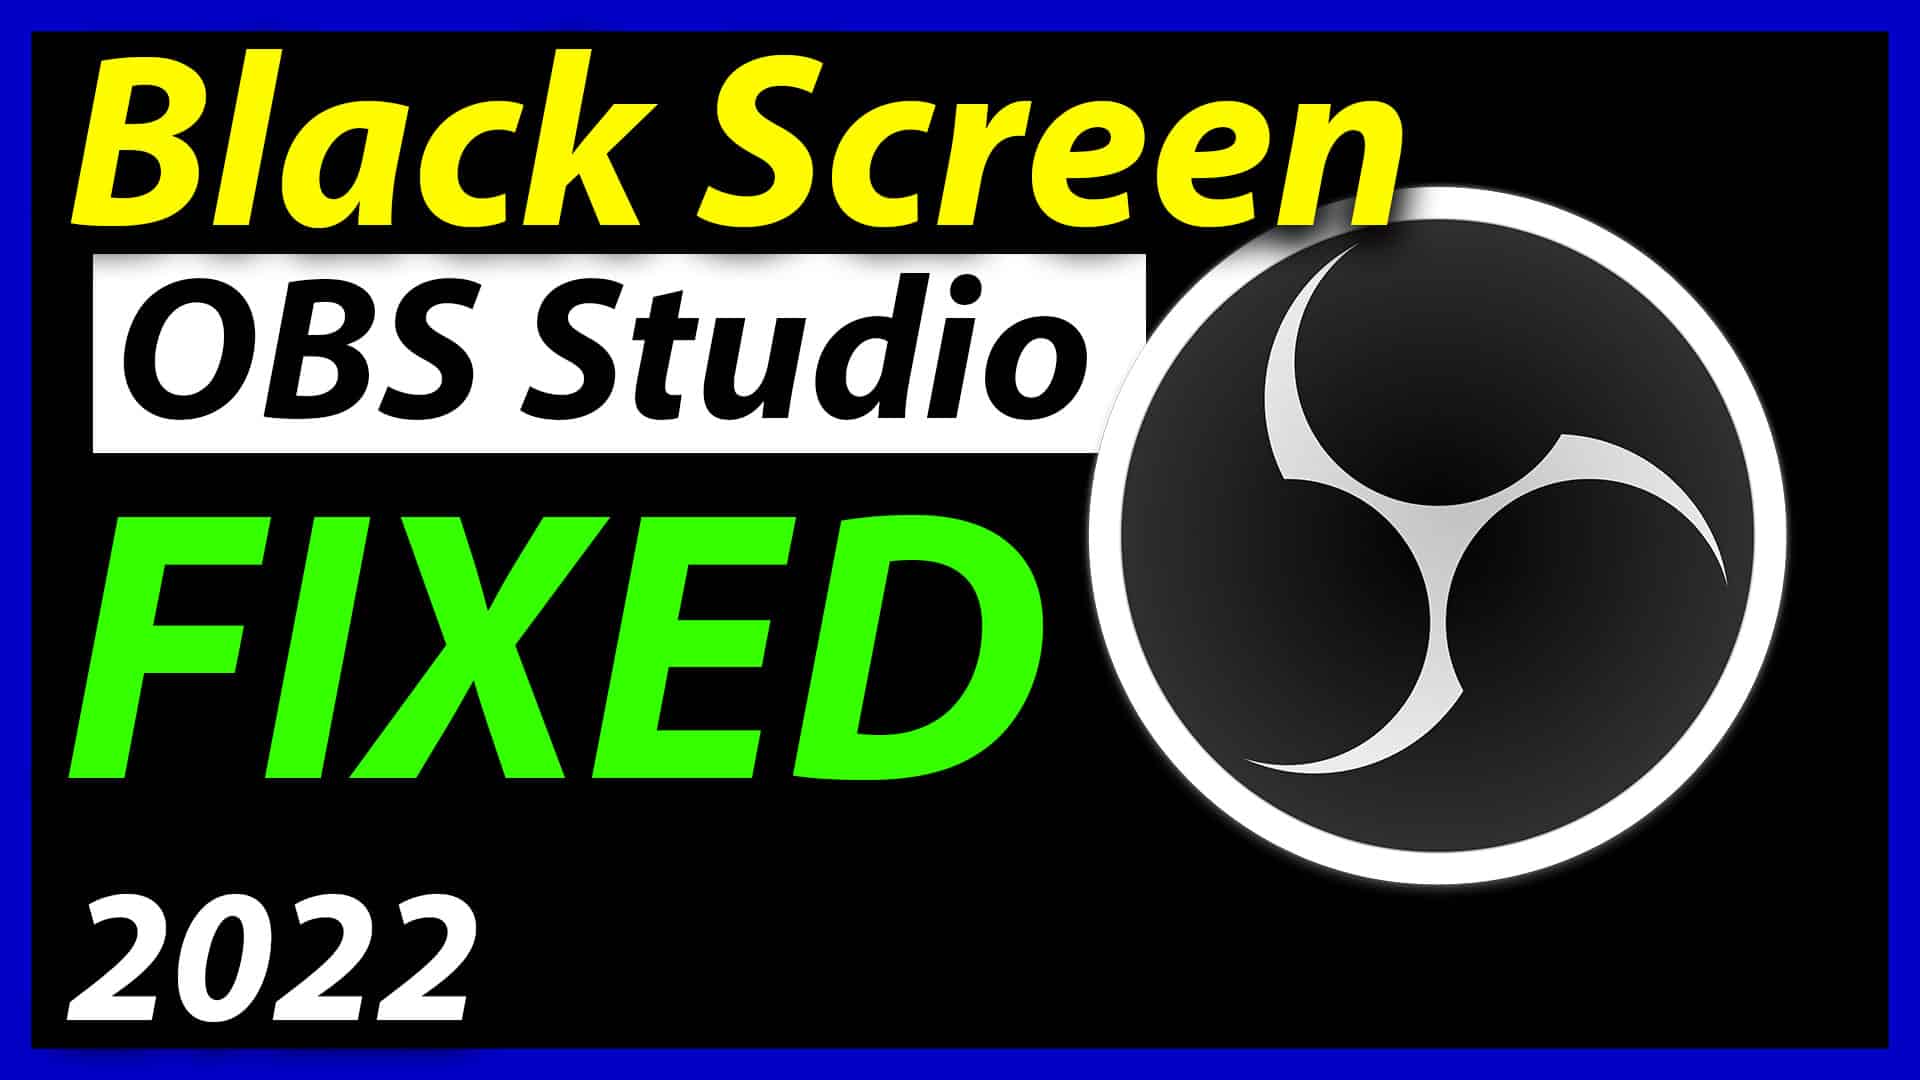 OBS Studio Black Screen Fixed 2022